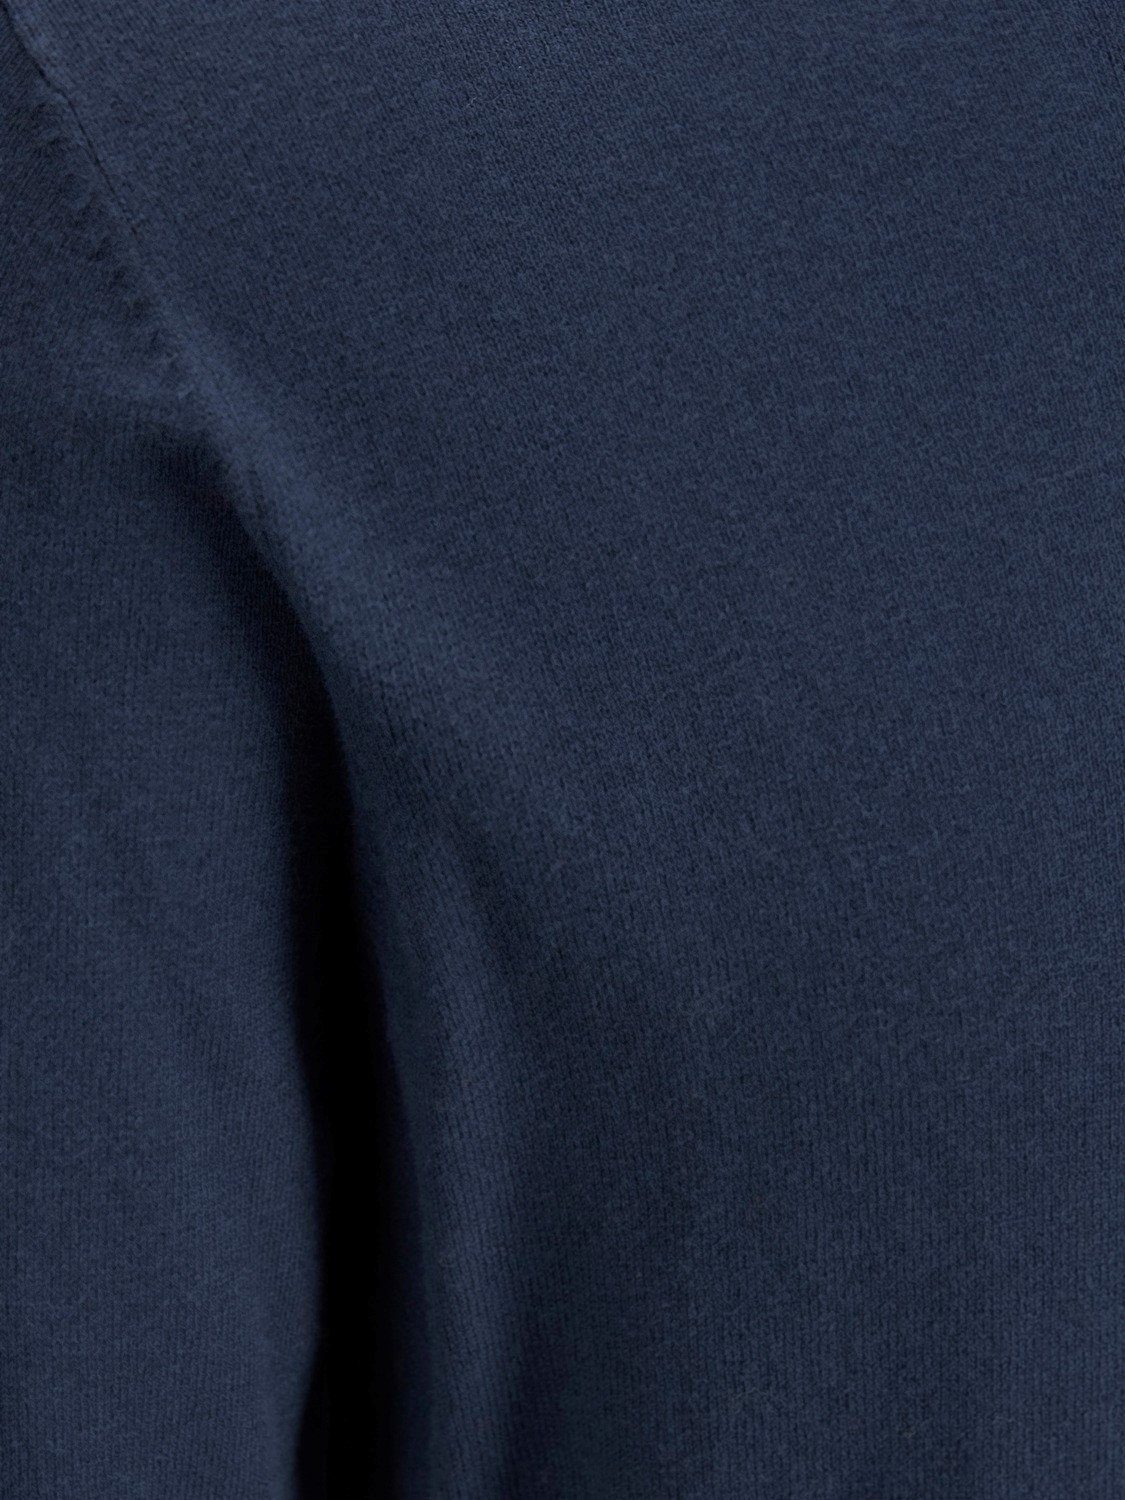 Sweater Langarm Rundhals Longsleeve Dünner JJEEMIL & Navy Strickpullover 4295 Jones Jack Basic in